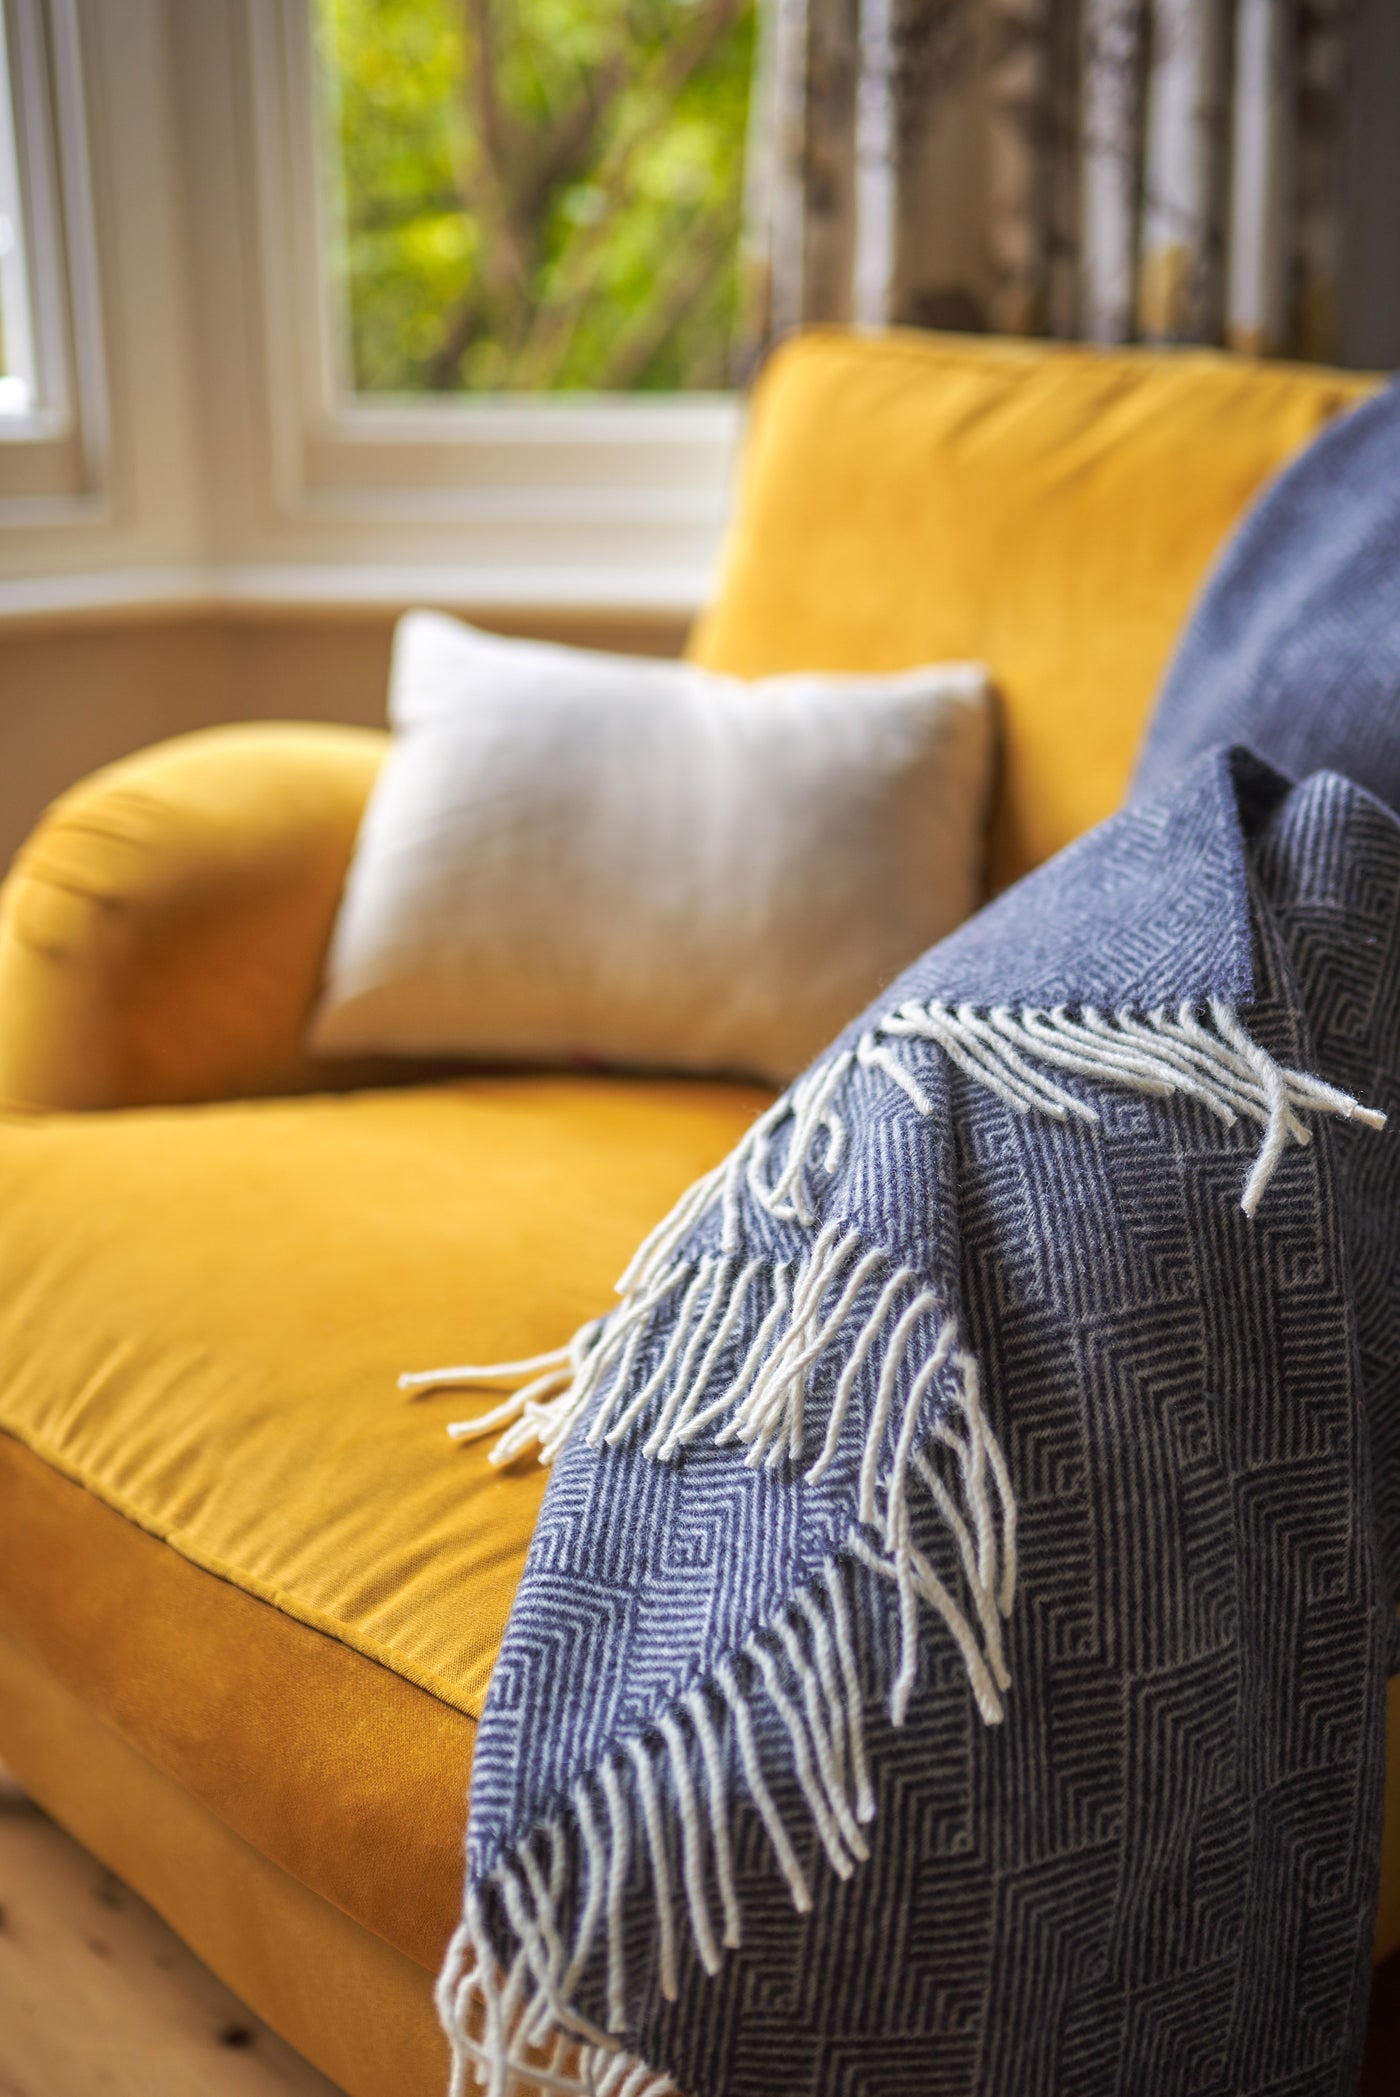 blue wool blanket on yellow sofa